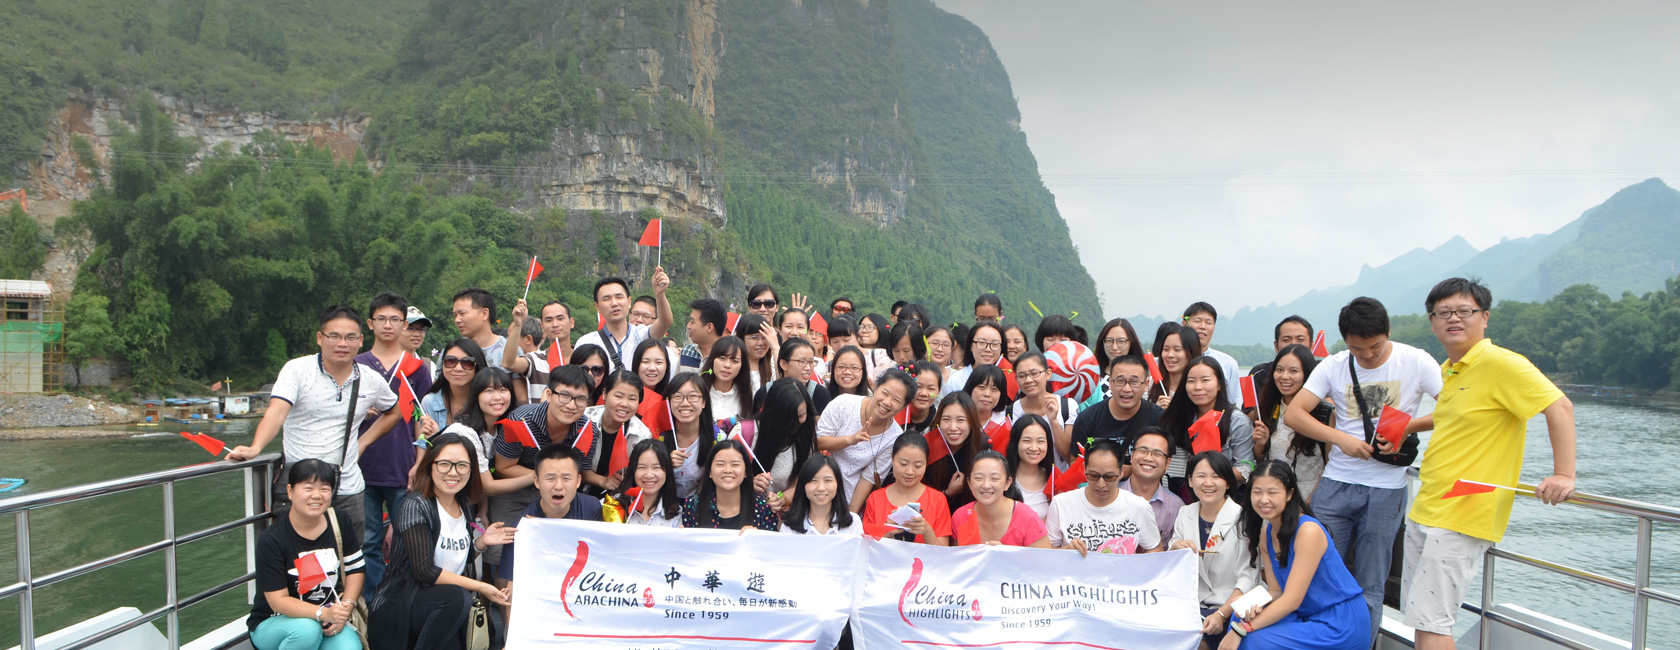 china highlights tour company